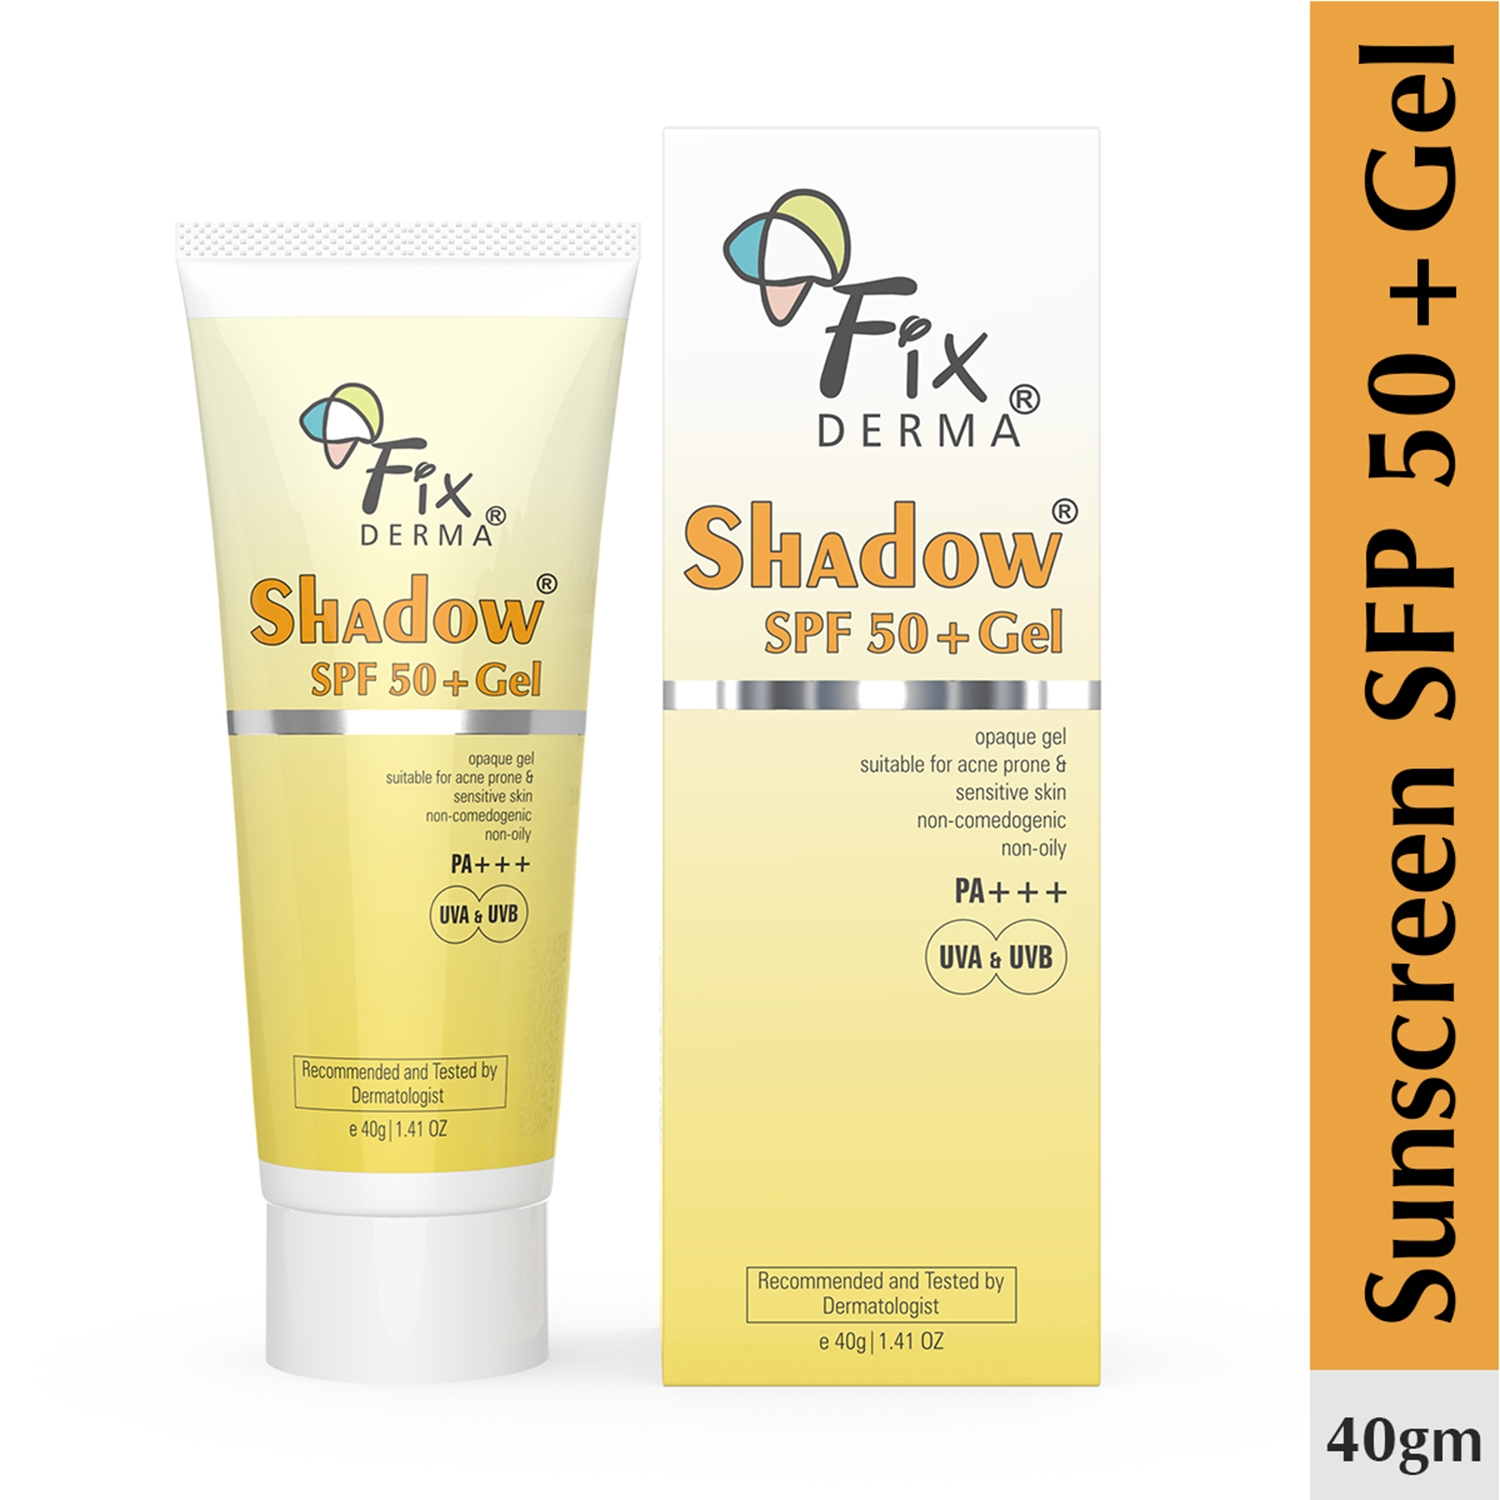 Fixderma | Fixderma Shadow Sunscreen Gel SPF 50+ PA+++ UVA & UVB Protection (40g)